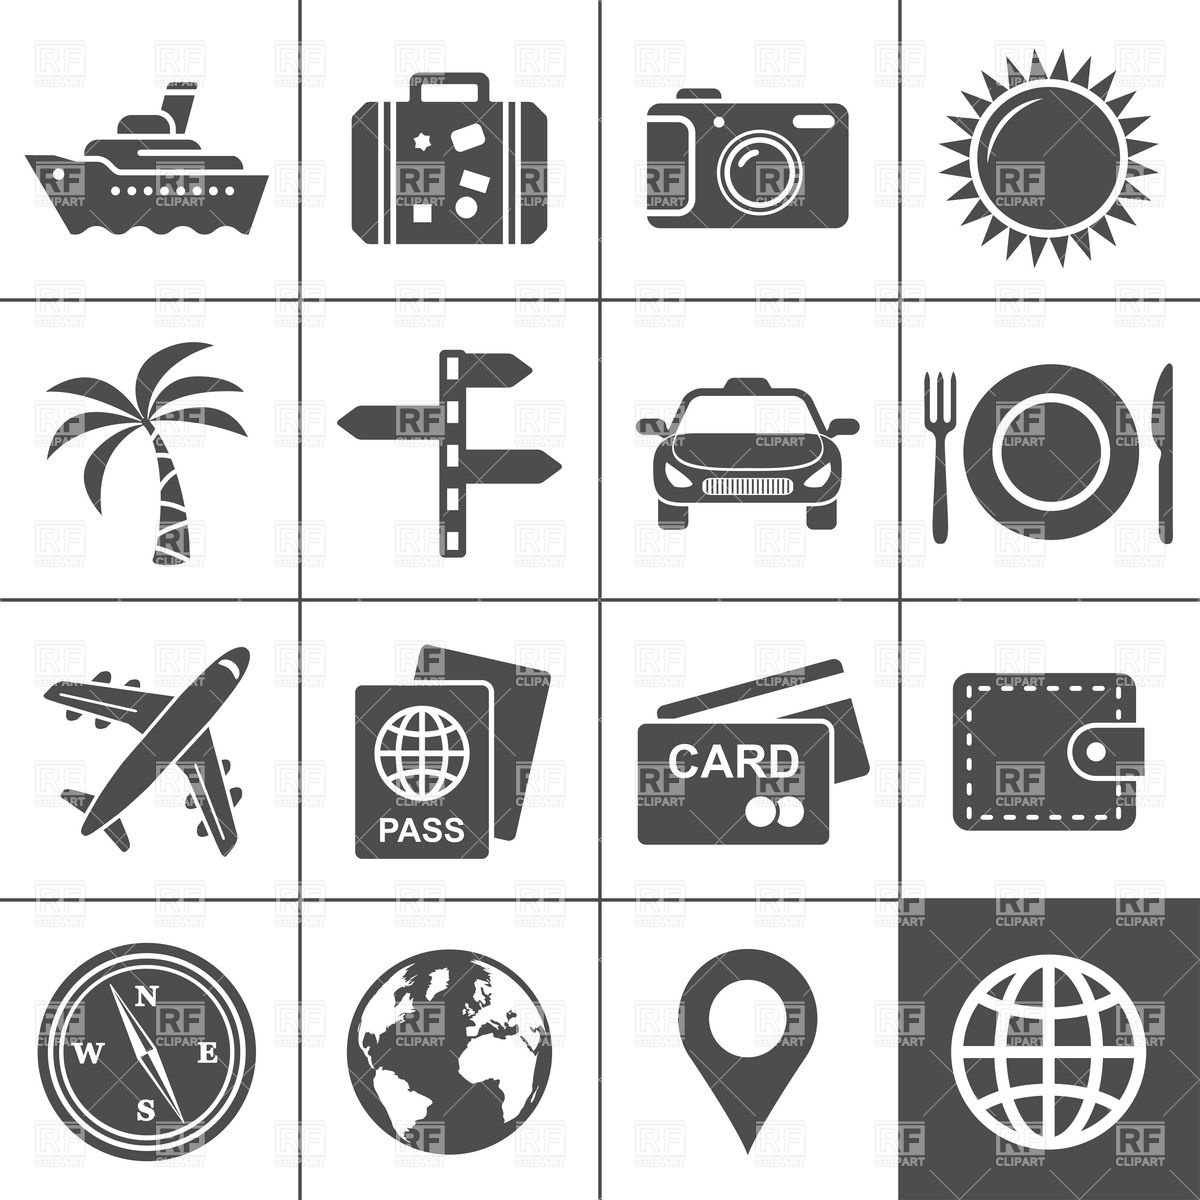 Free Clip Art Travel Icons